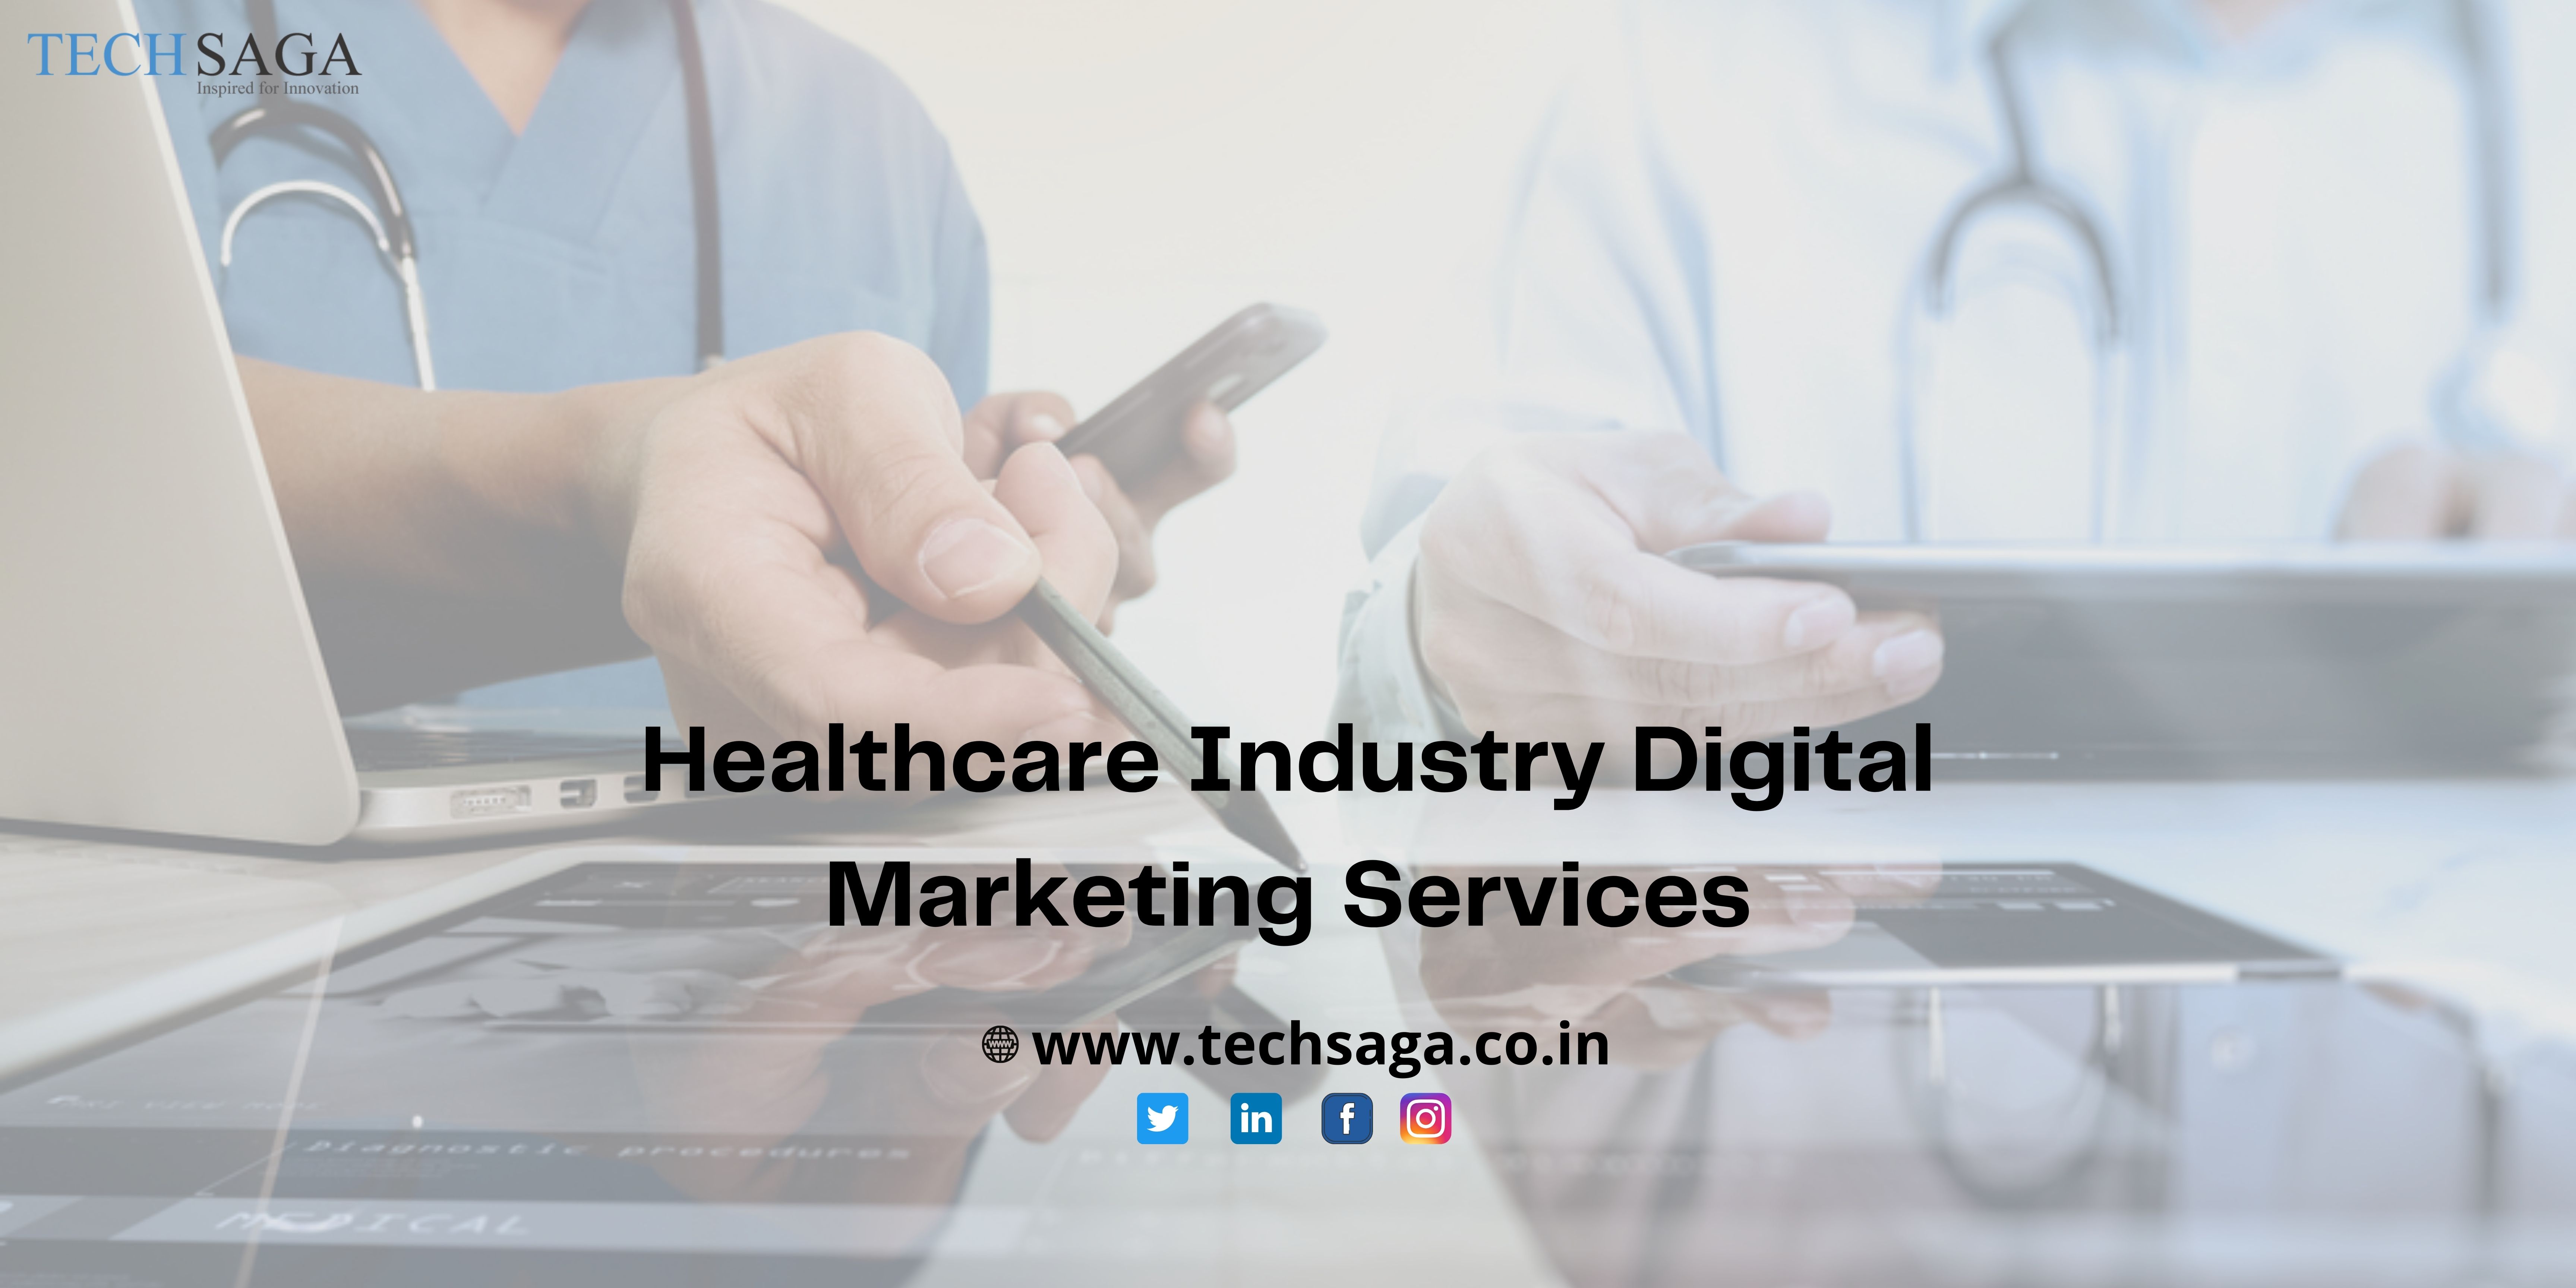 Healthcare Industry Digital Marketing ervices.jpg  by techsaga